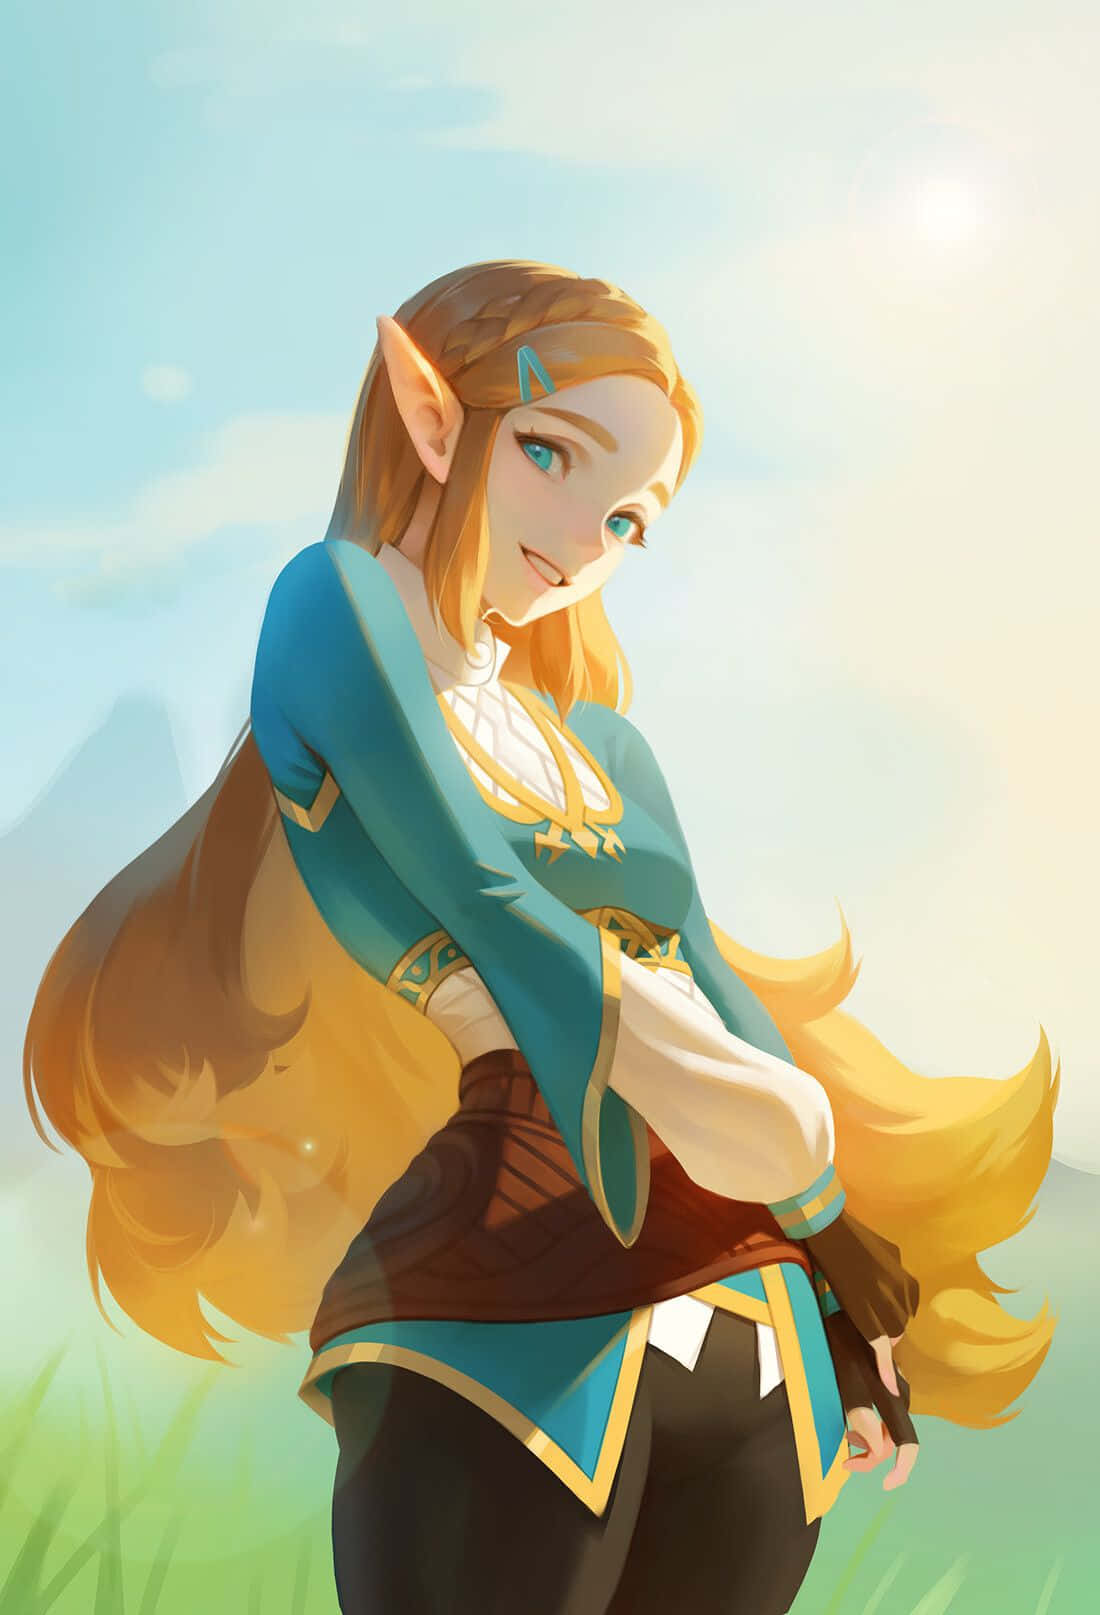 Link exploring Hyrule in The Legend of Zelda: Breath of the Wild Wallpaper